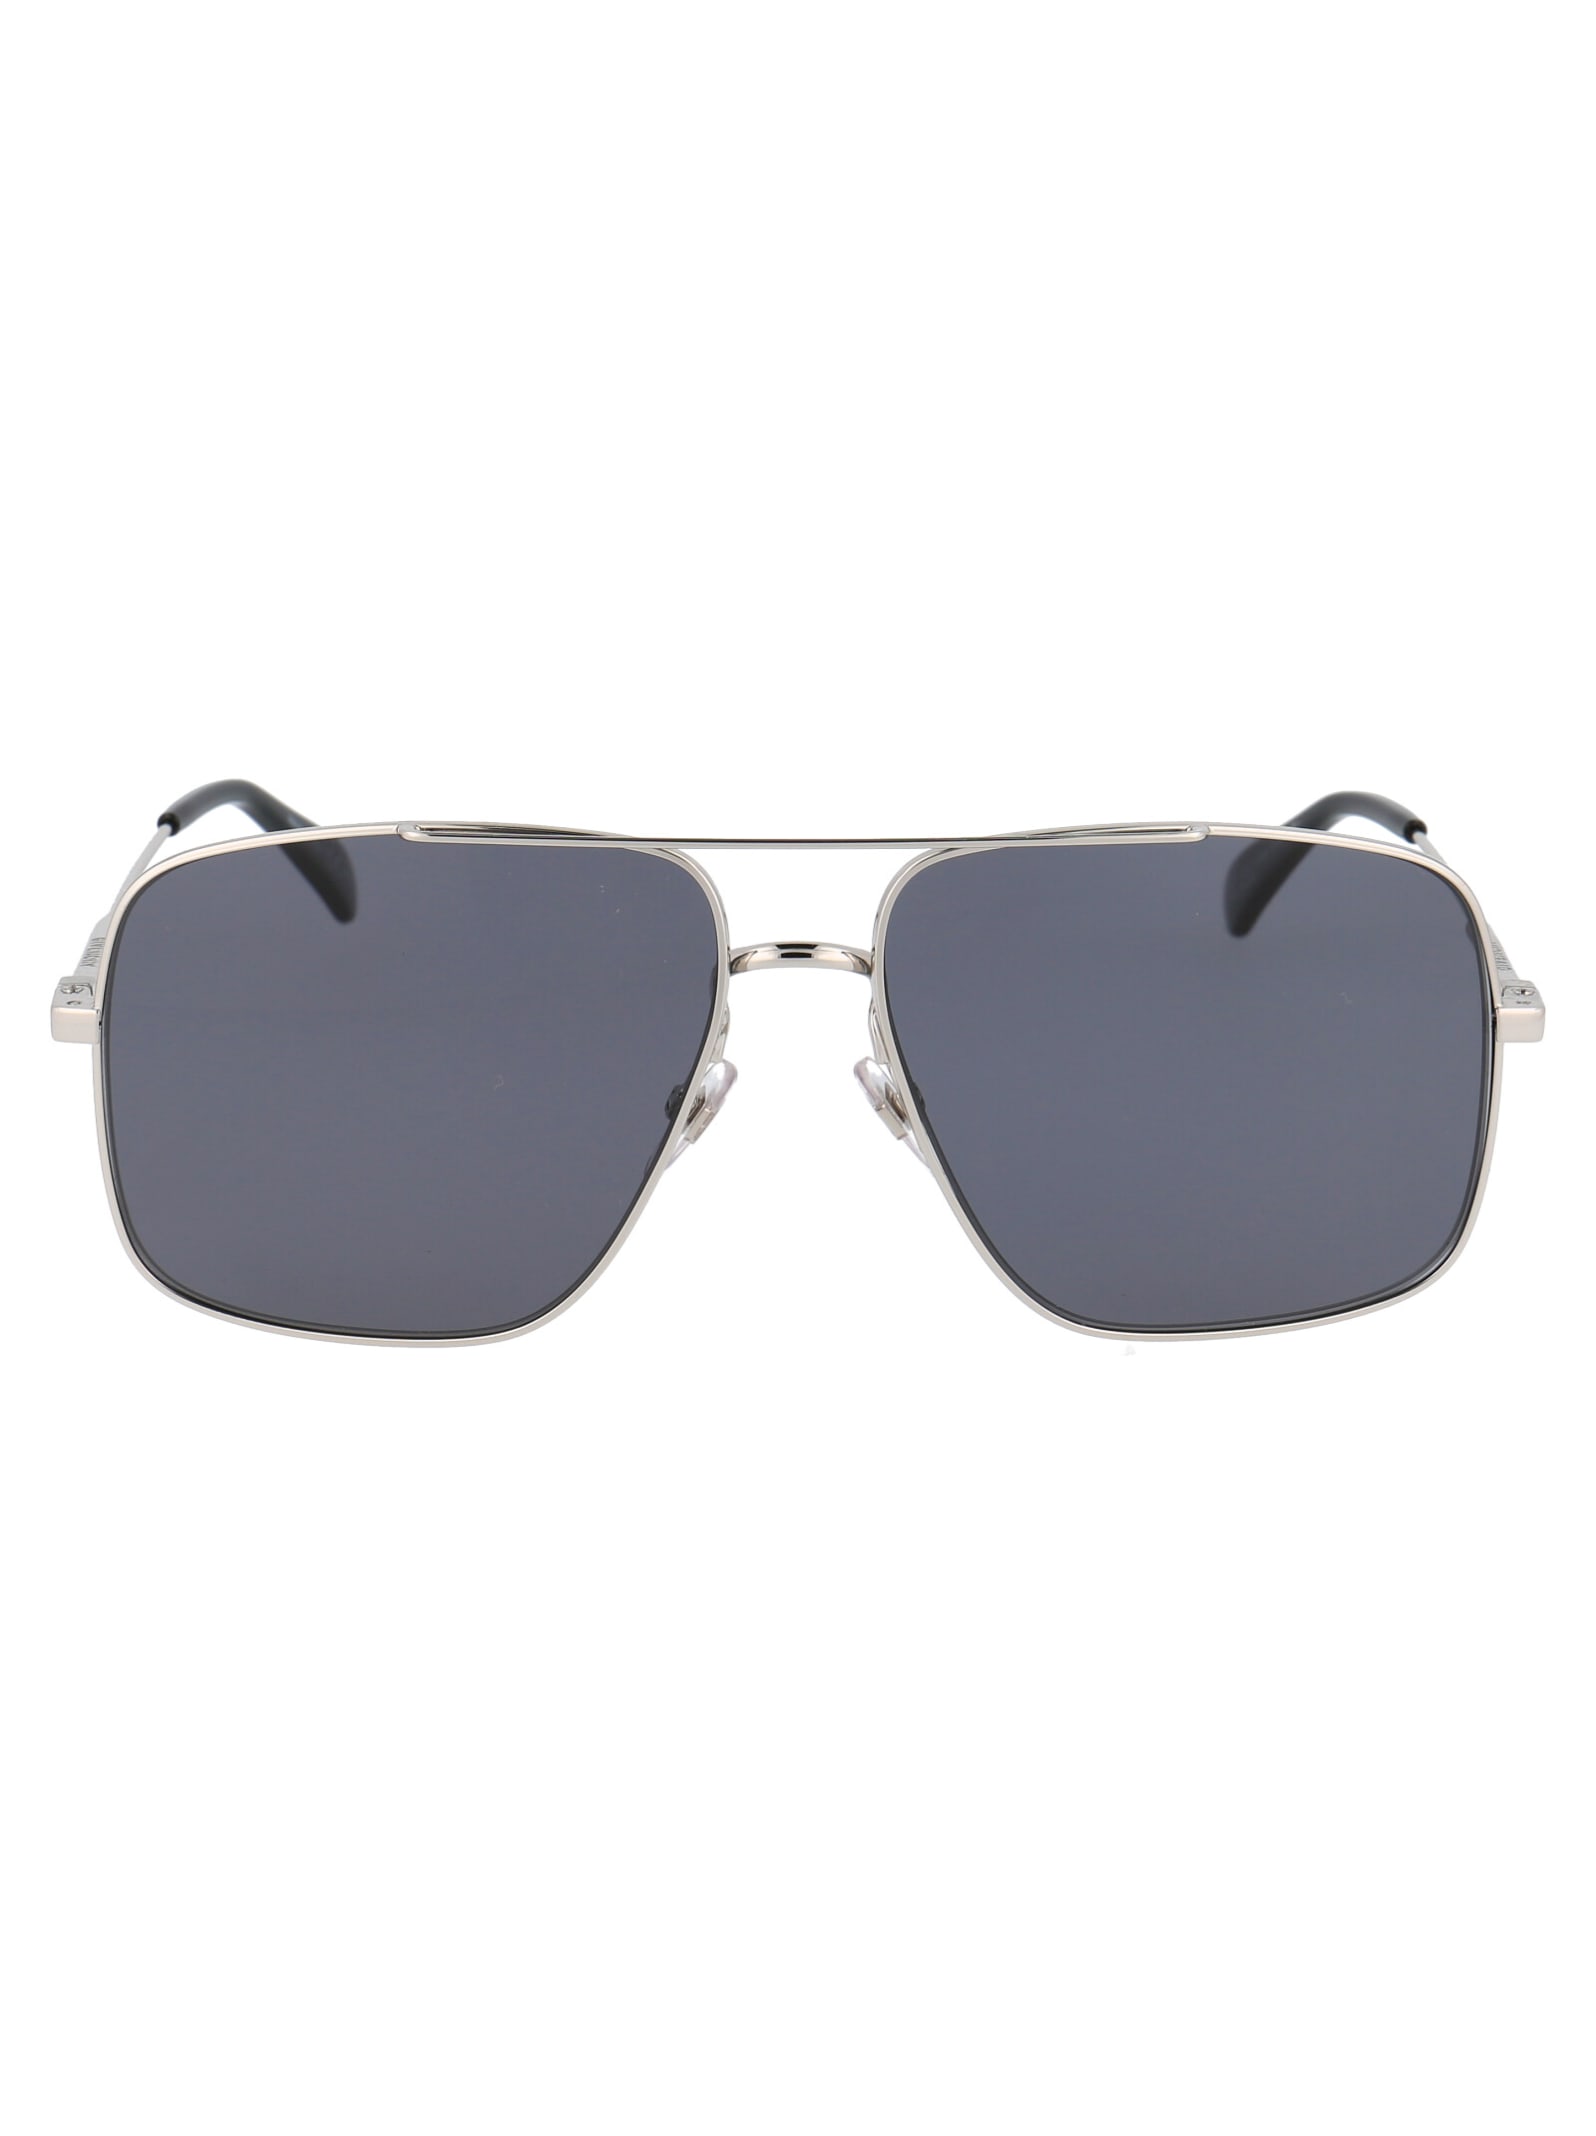 Givenchy Gv 7119/s Sunglasses In 010m9 Palladium